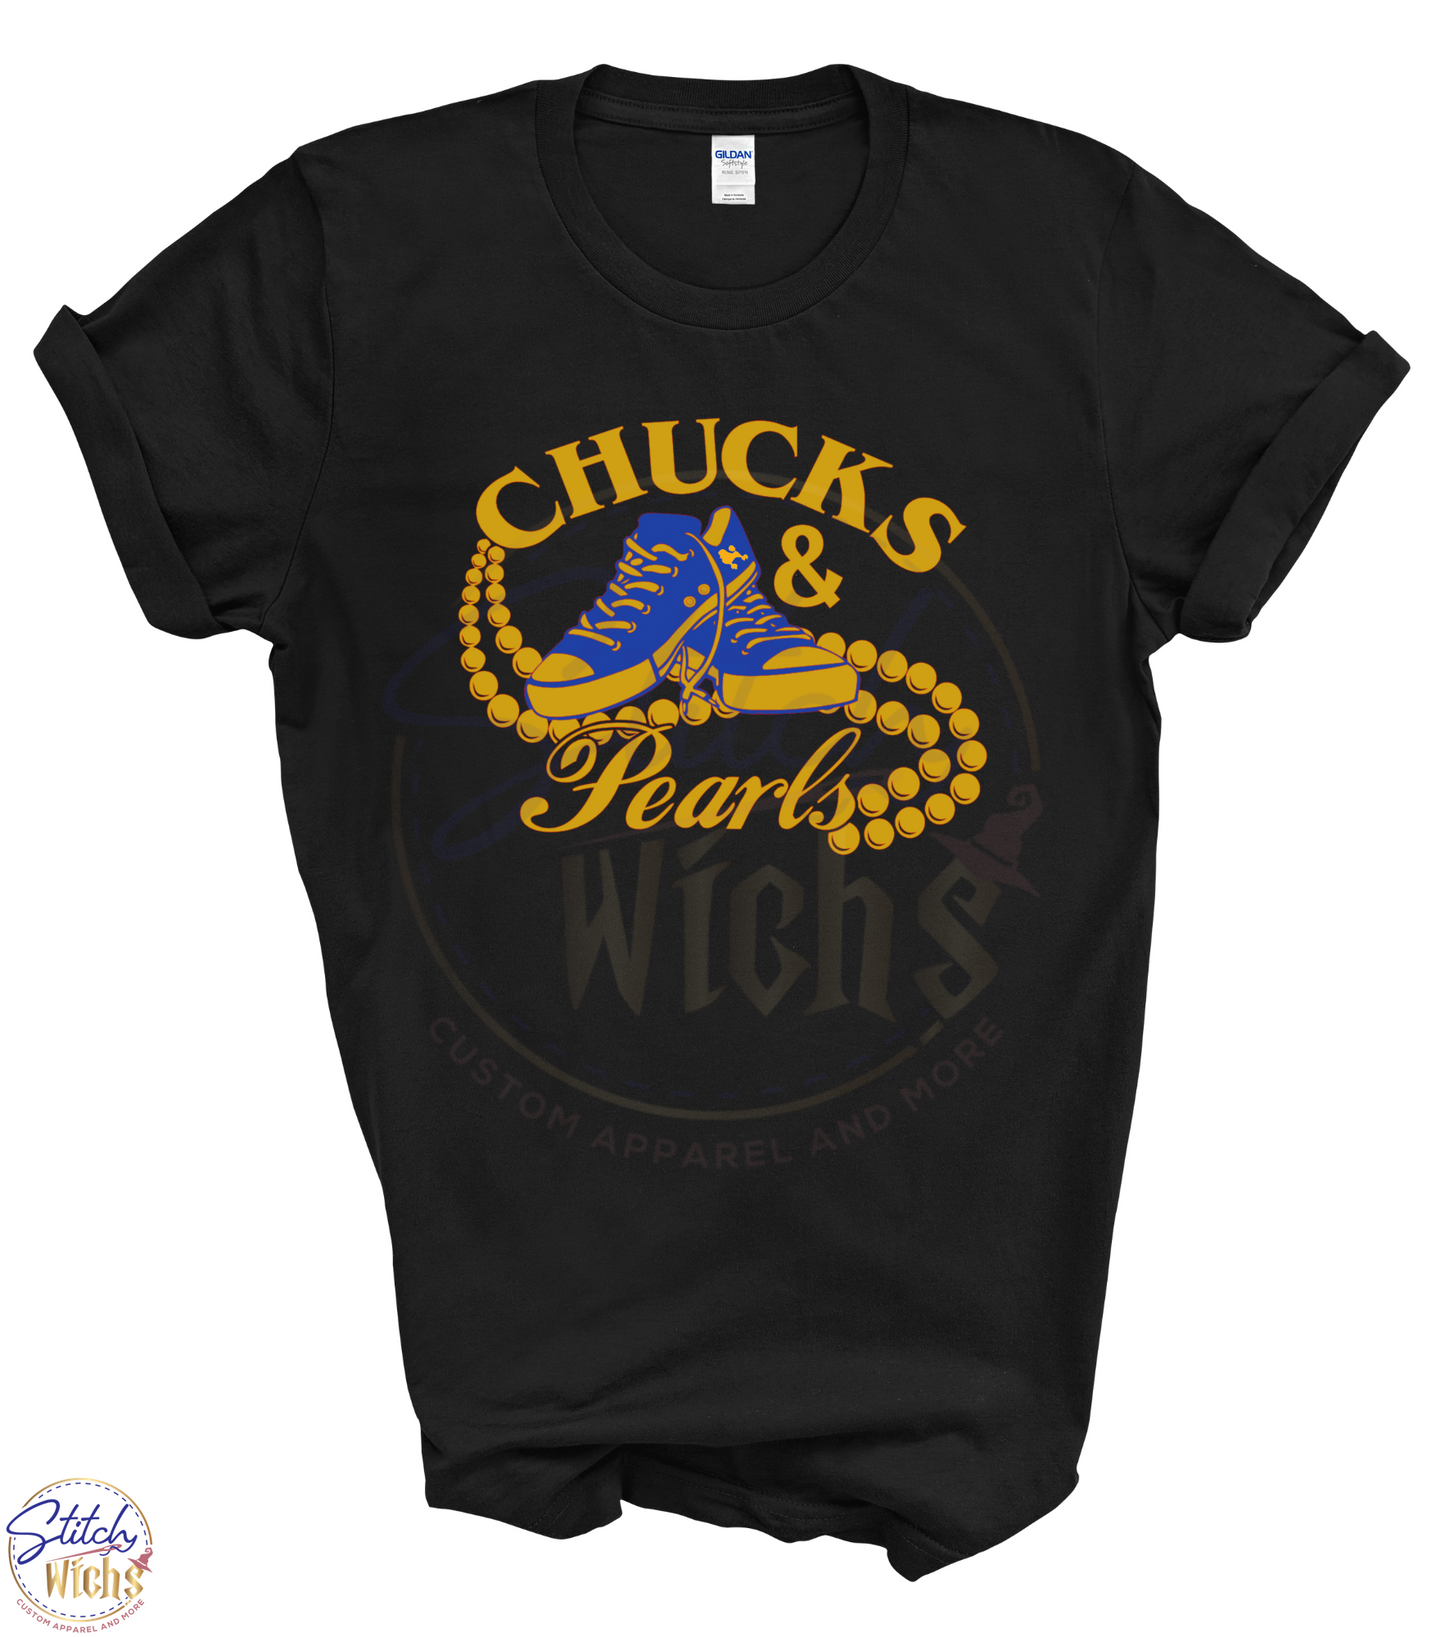 Chucks & Pearls - Royal Blue & Gold